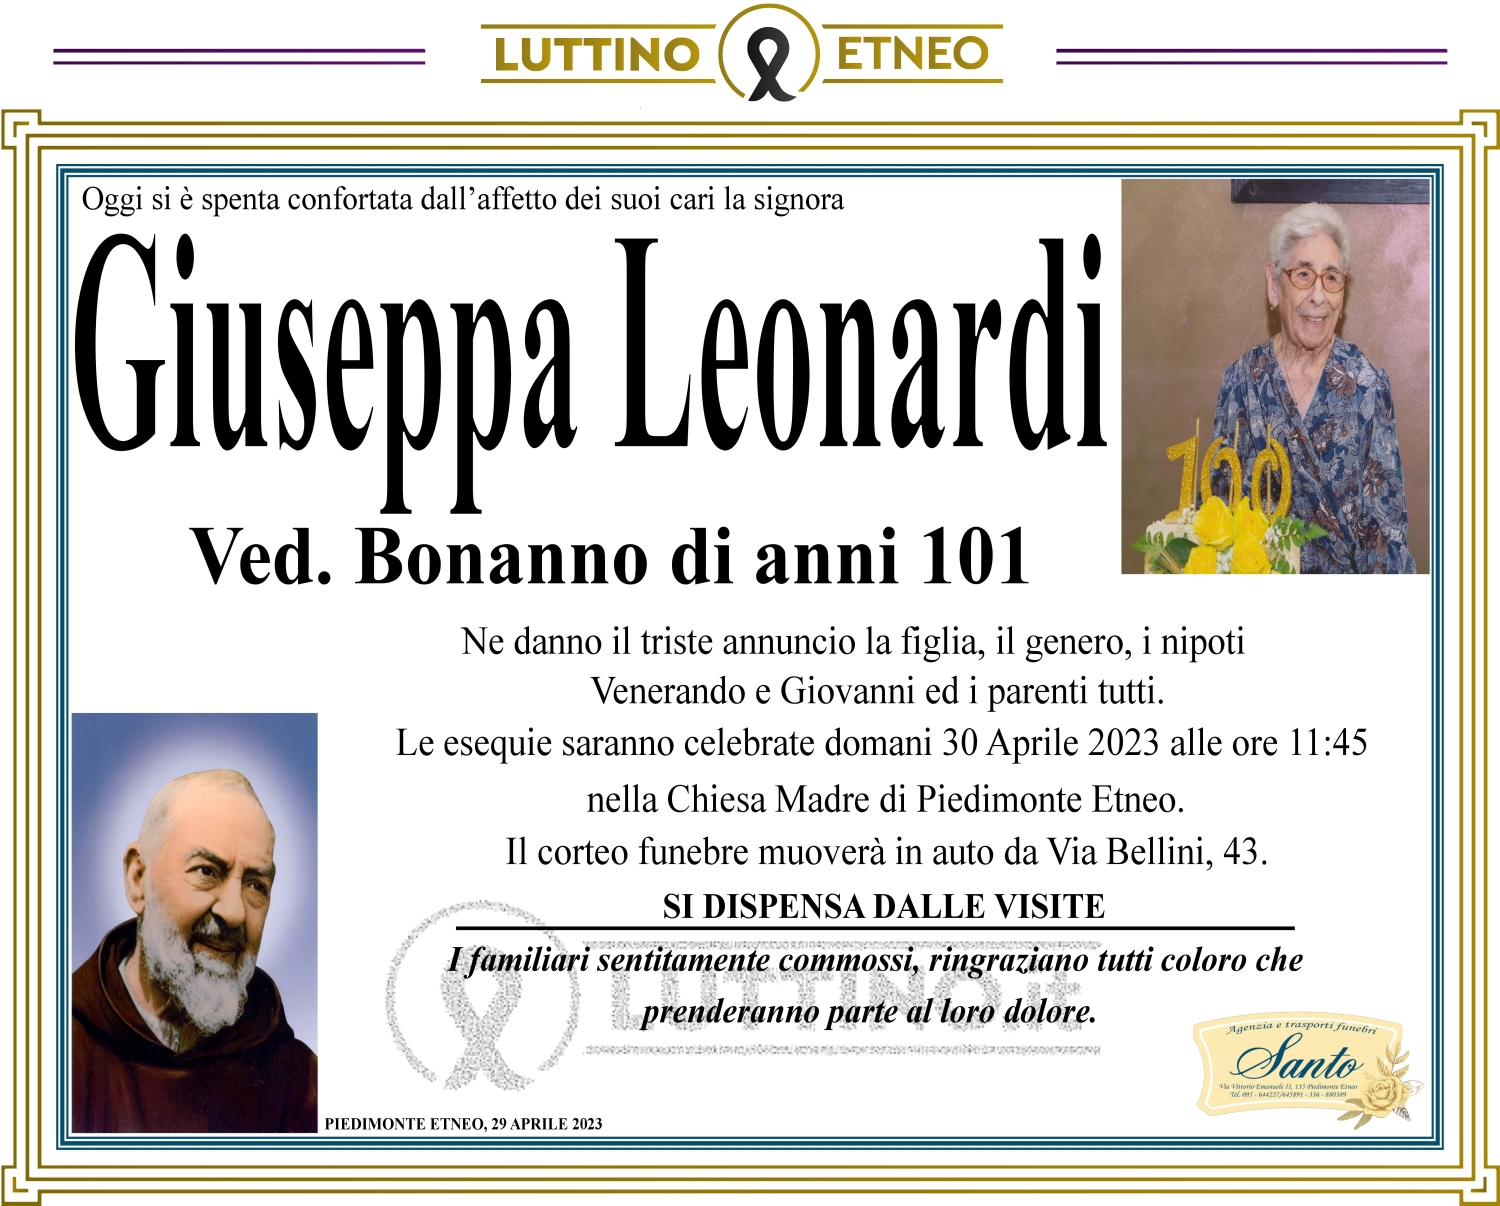 Giuseppa Leonardi